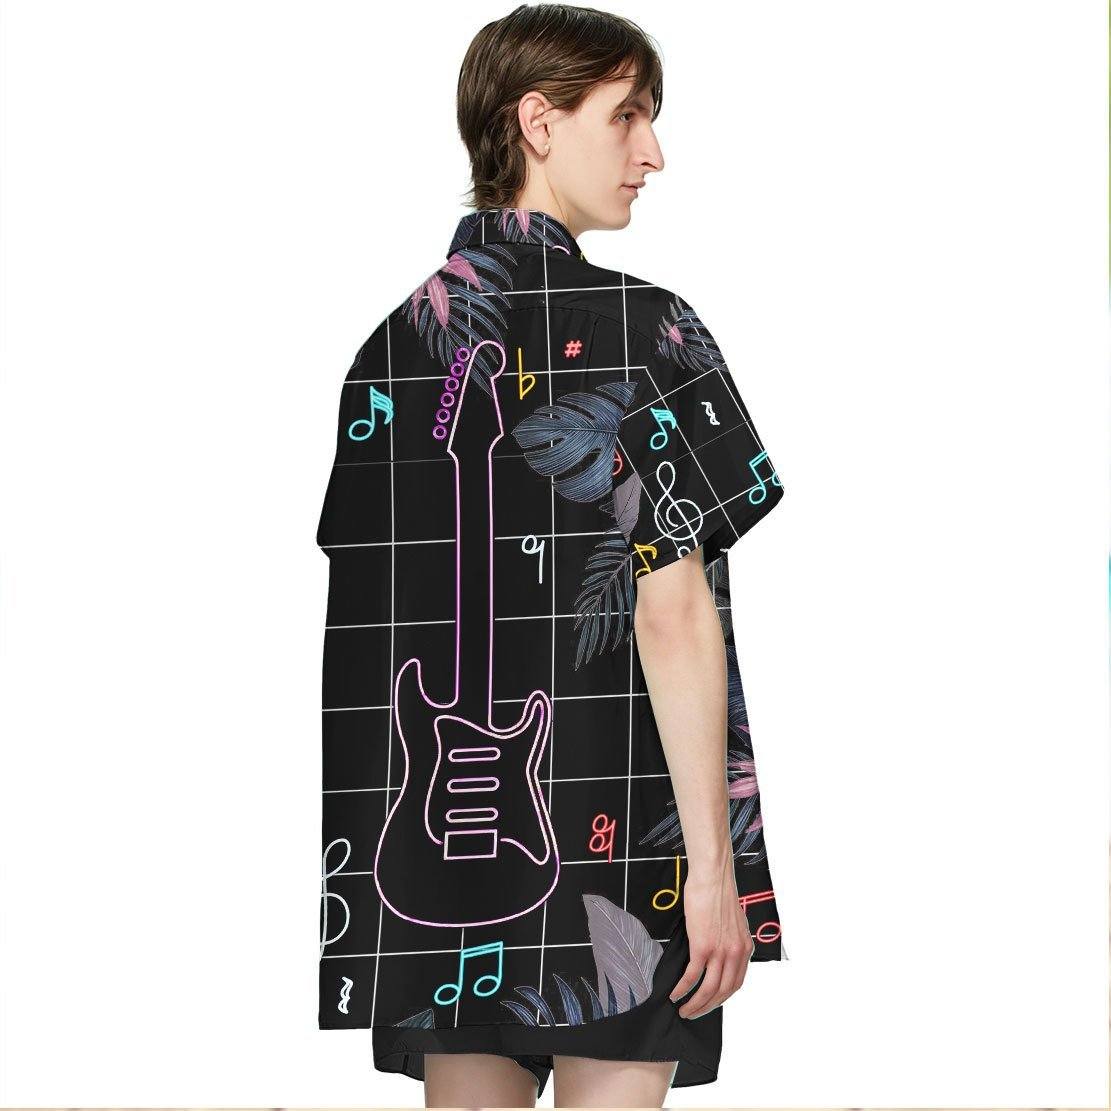 Neon Electric Guitar Hawaii Shirt 7